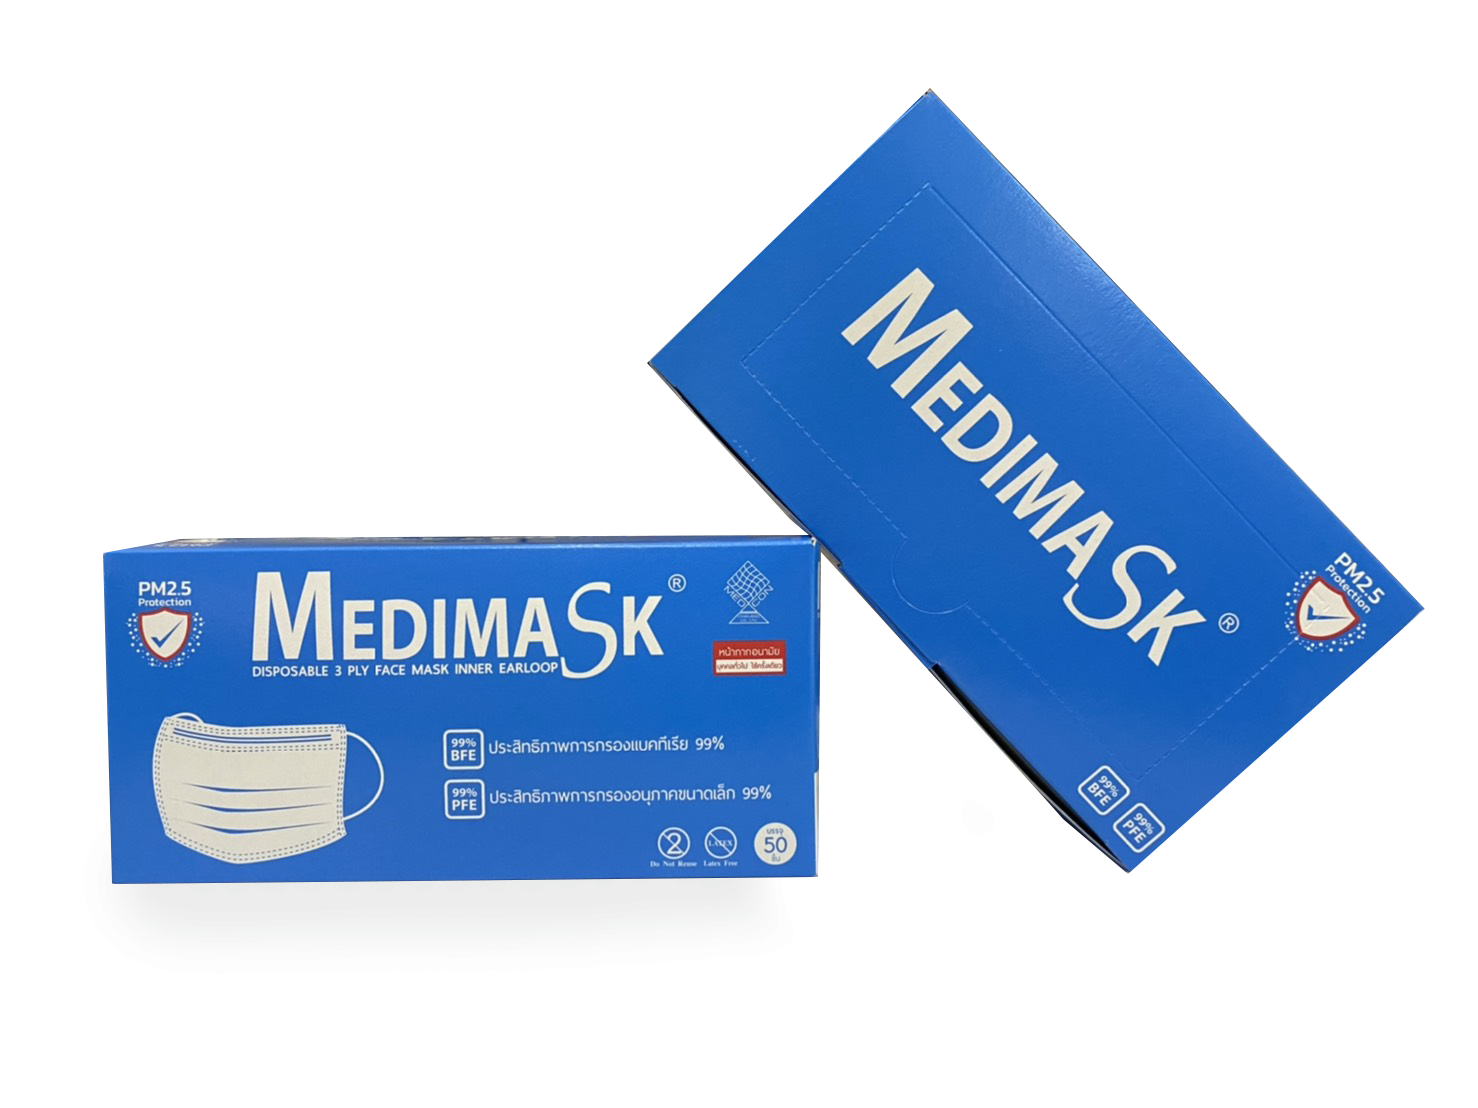 Medimask 3 Ply